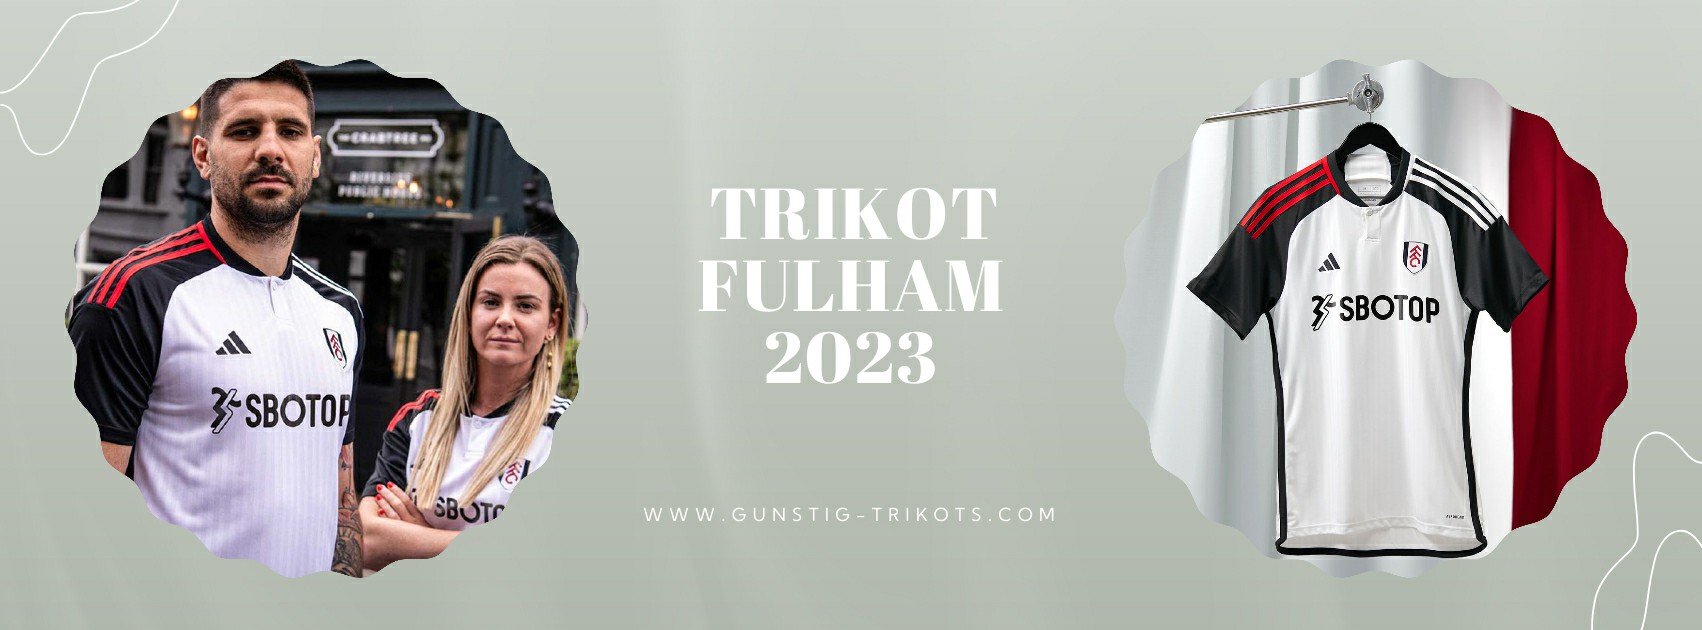 Fulham Trikot 2023-2024